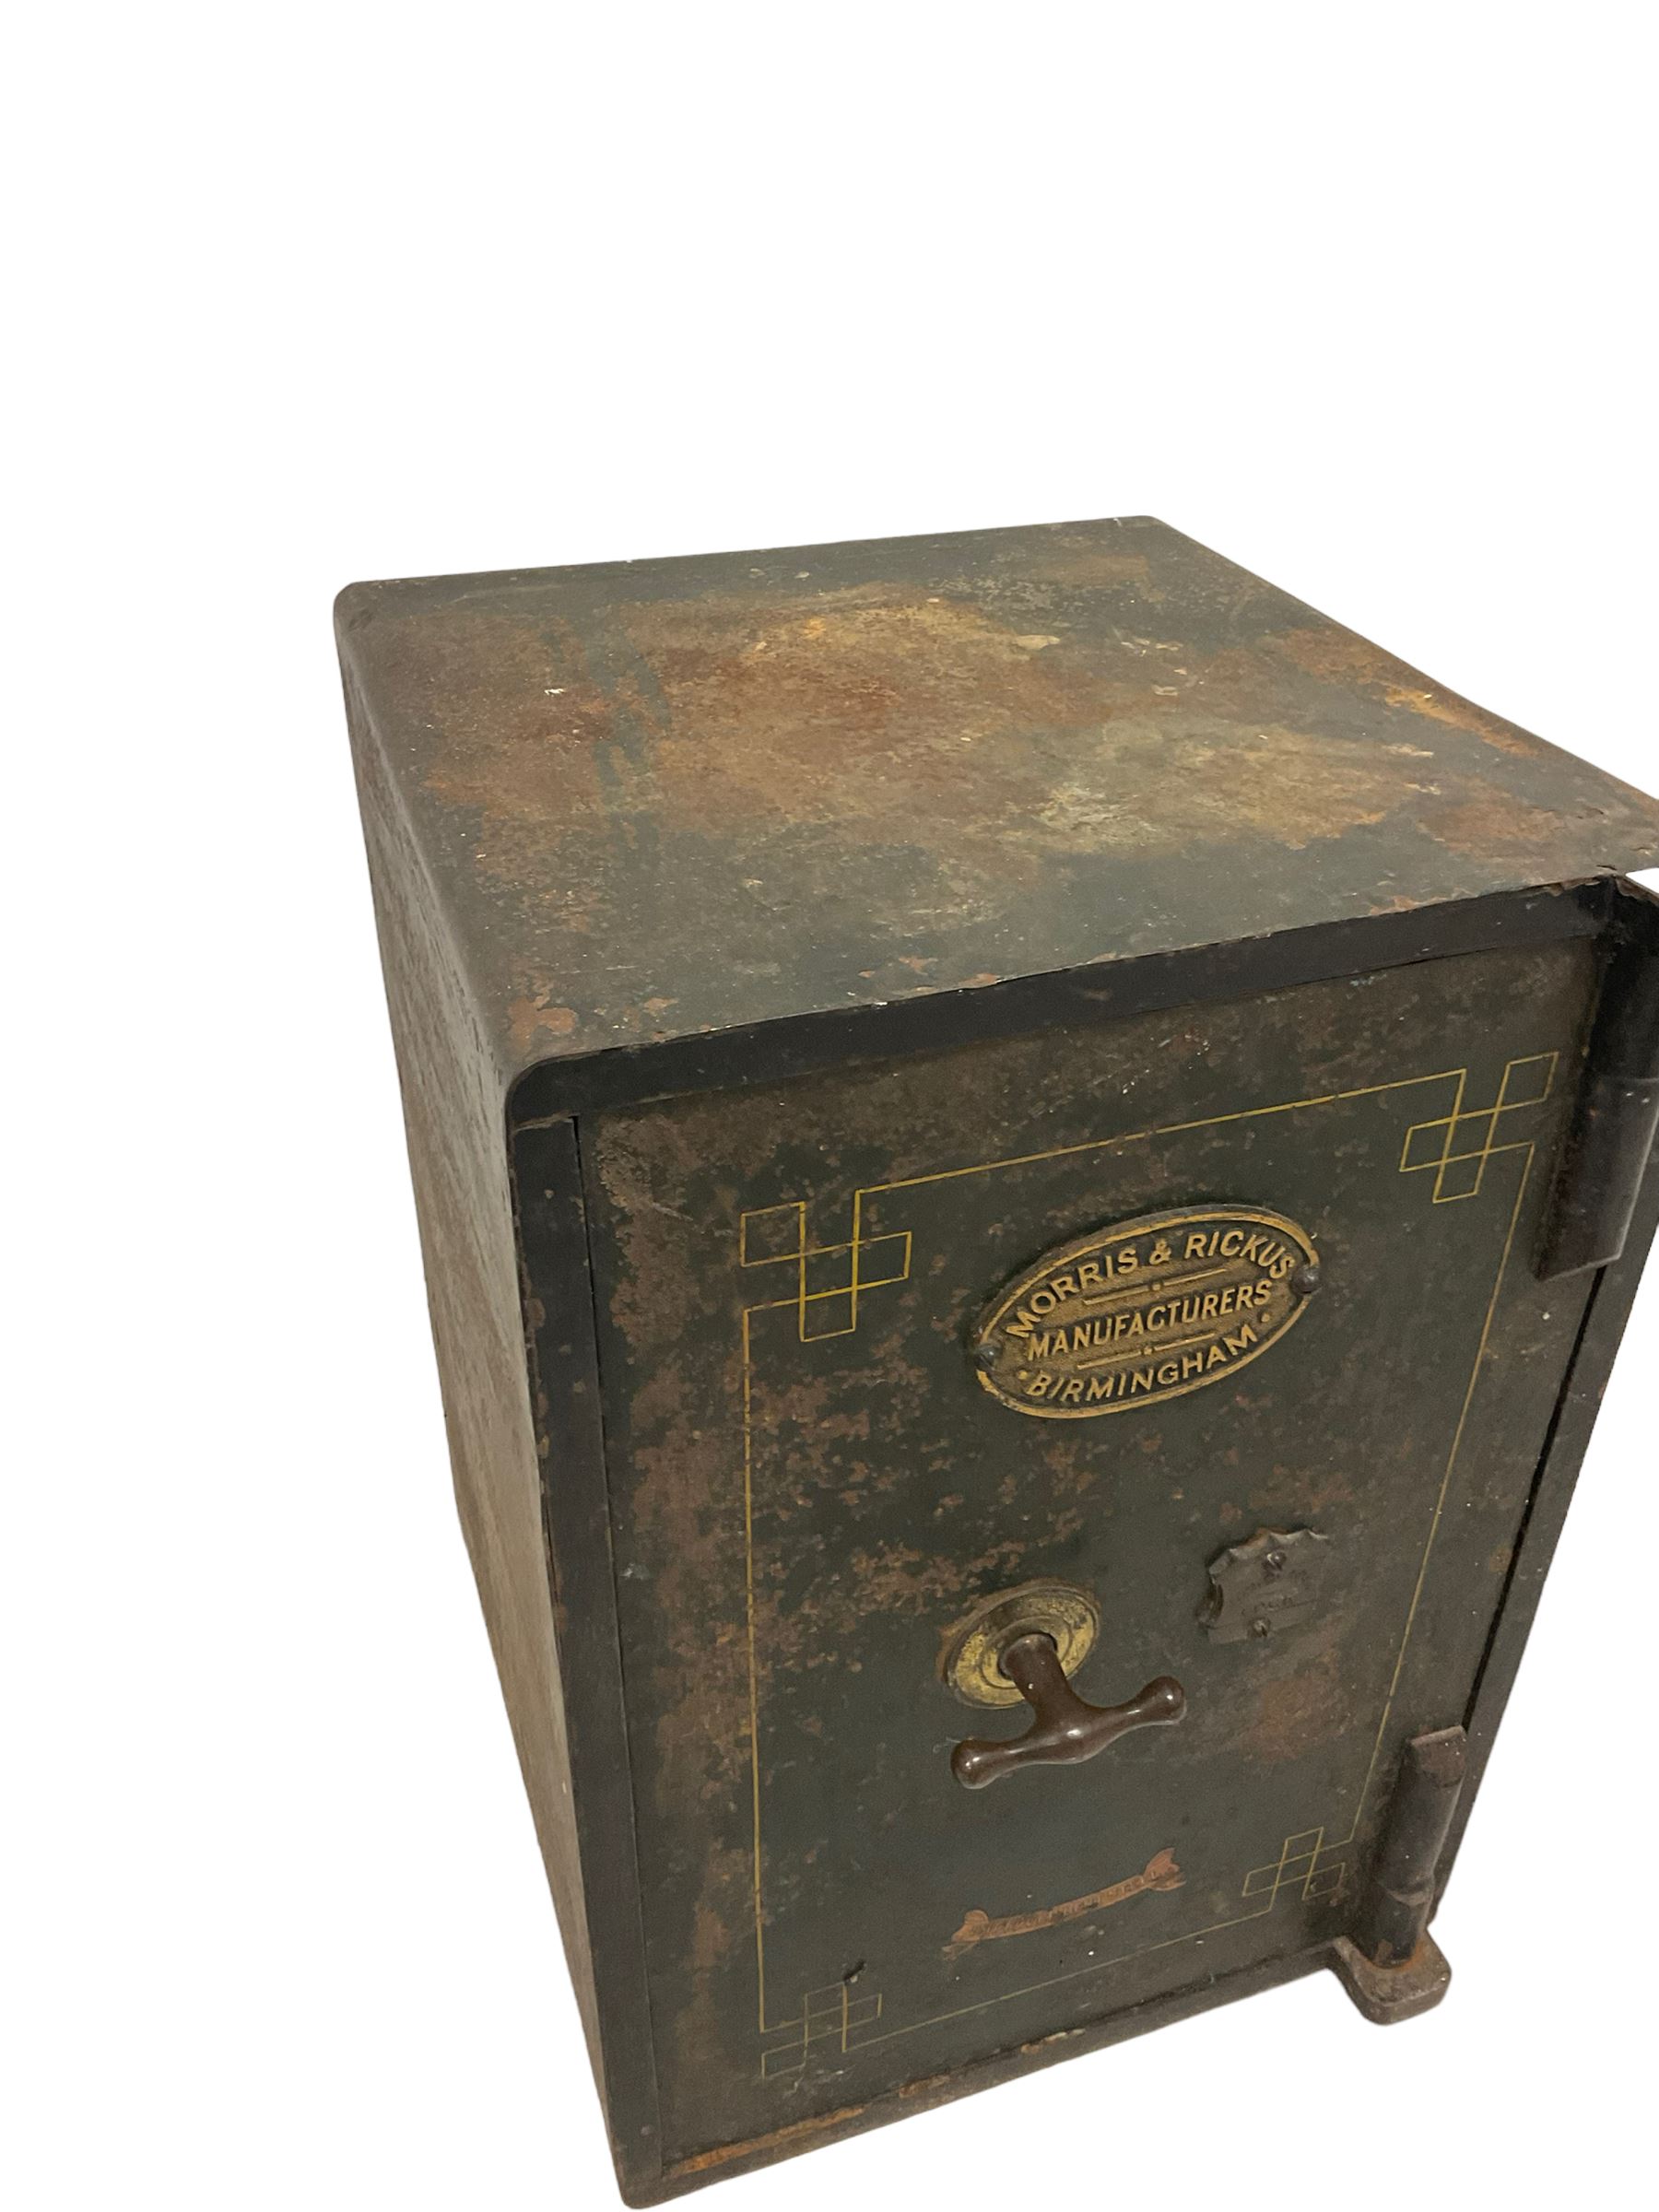 Morris & Rickus of Birmingham - Victorian safe with one hinged door - Image 3 of 5